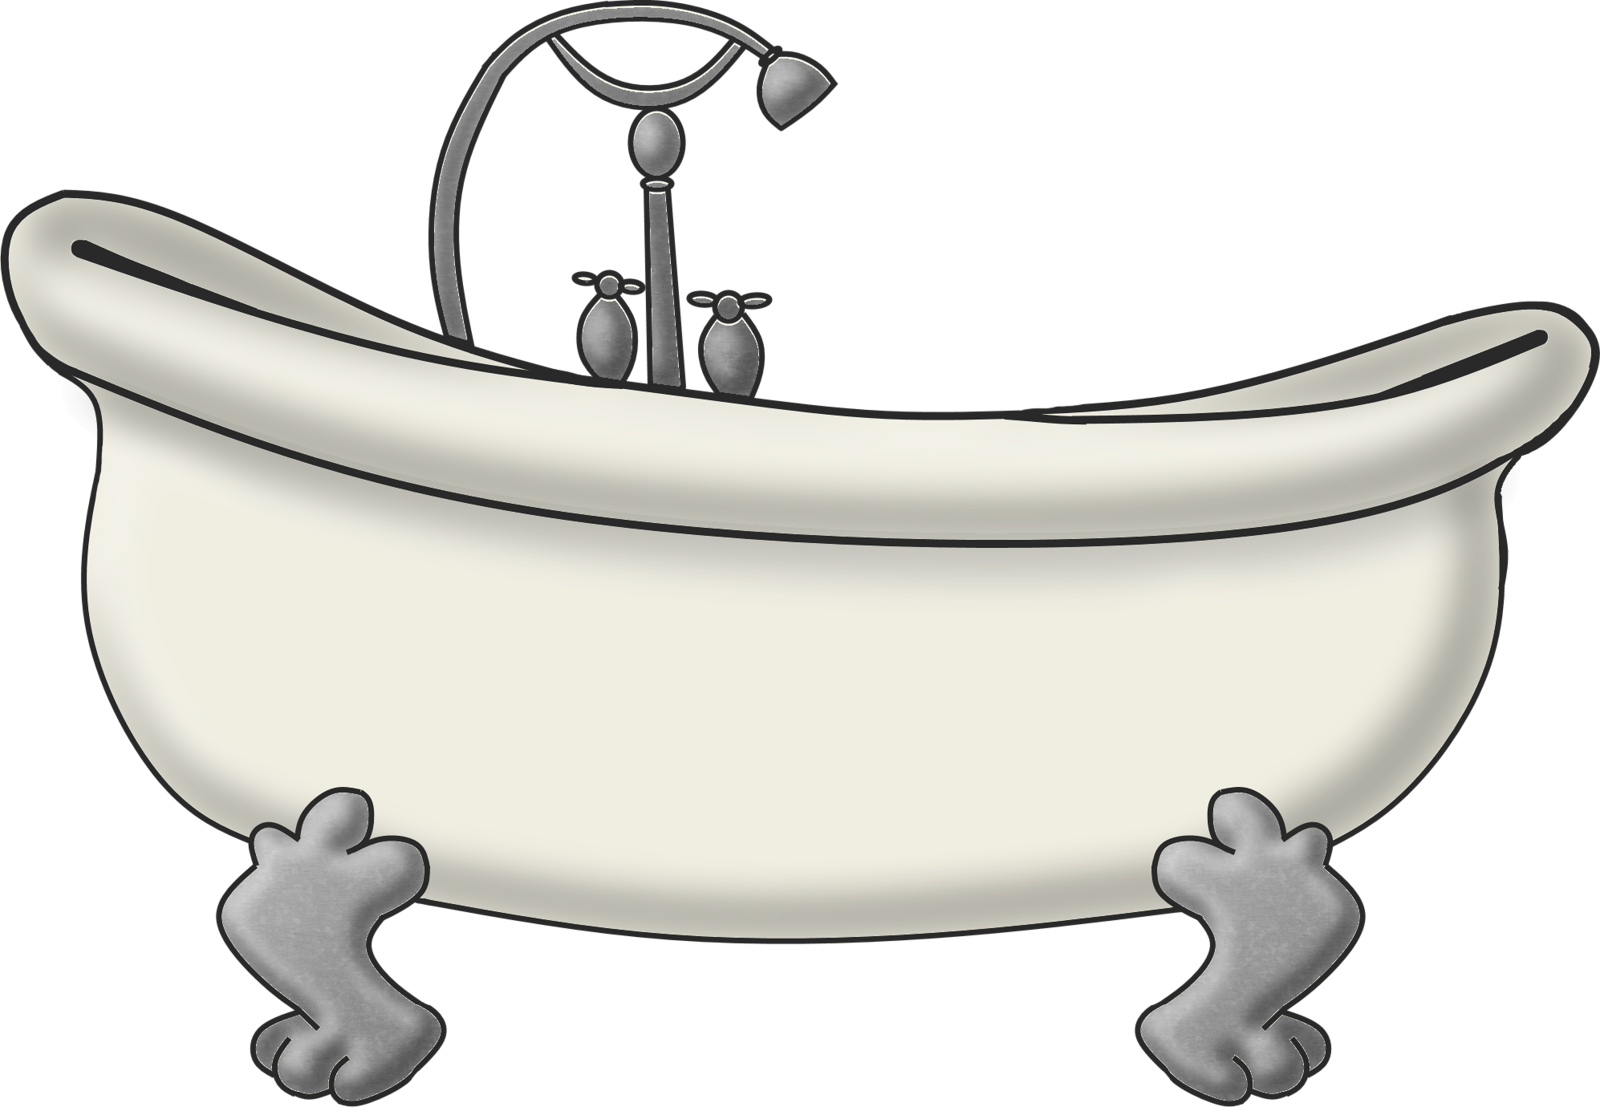 Baby Bath Tub Cartoon / Cartoon Portable Baby Bath Tub Mat With Shower